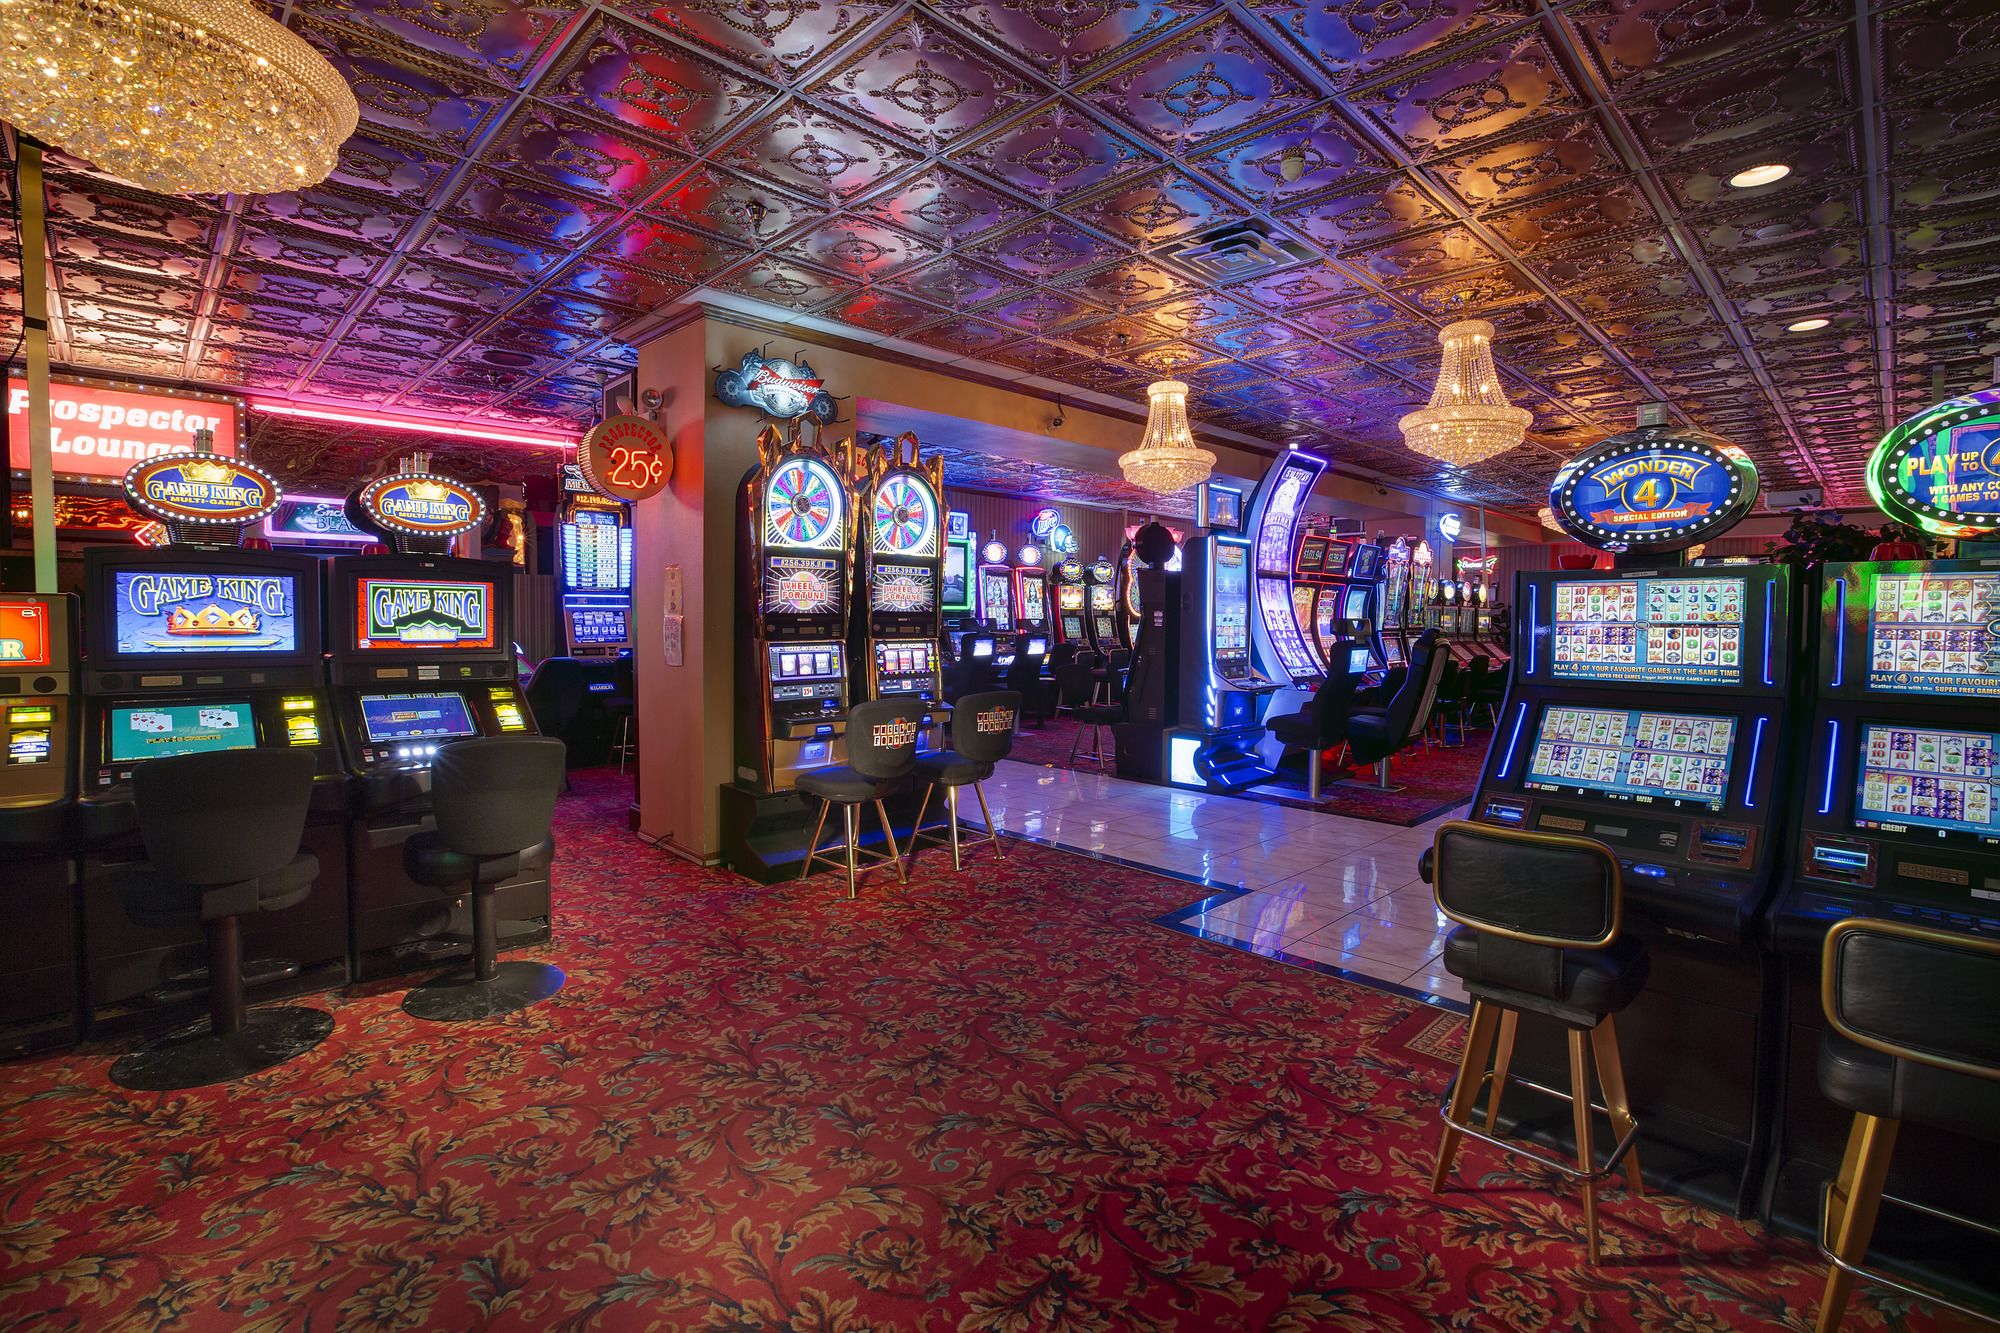 Prospector Hotel & Gambling Hall